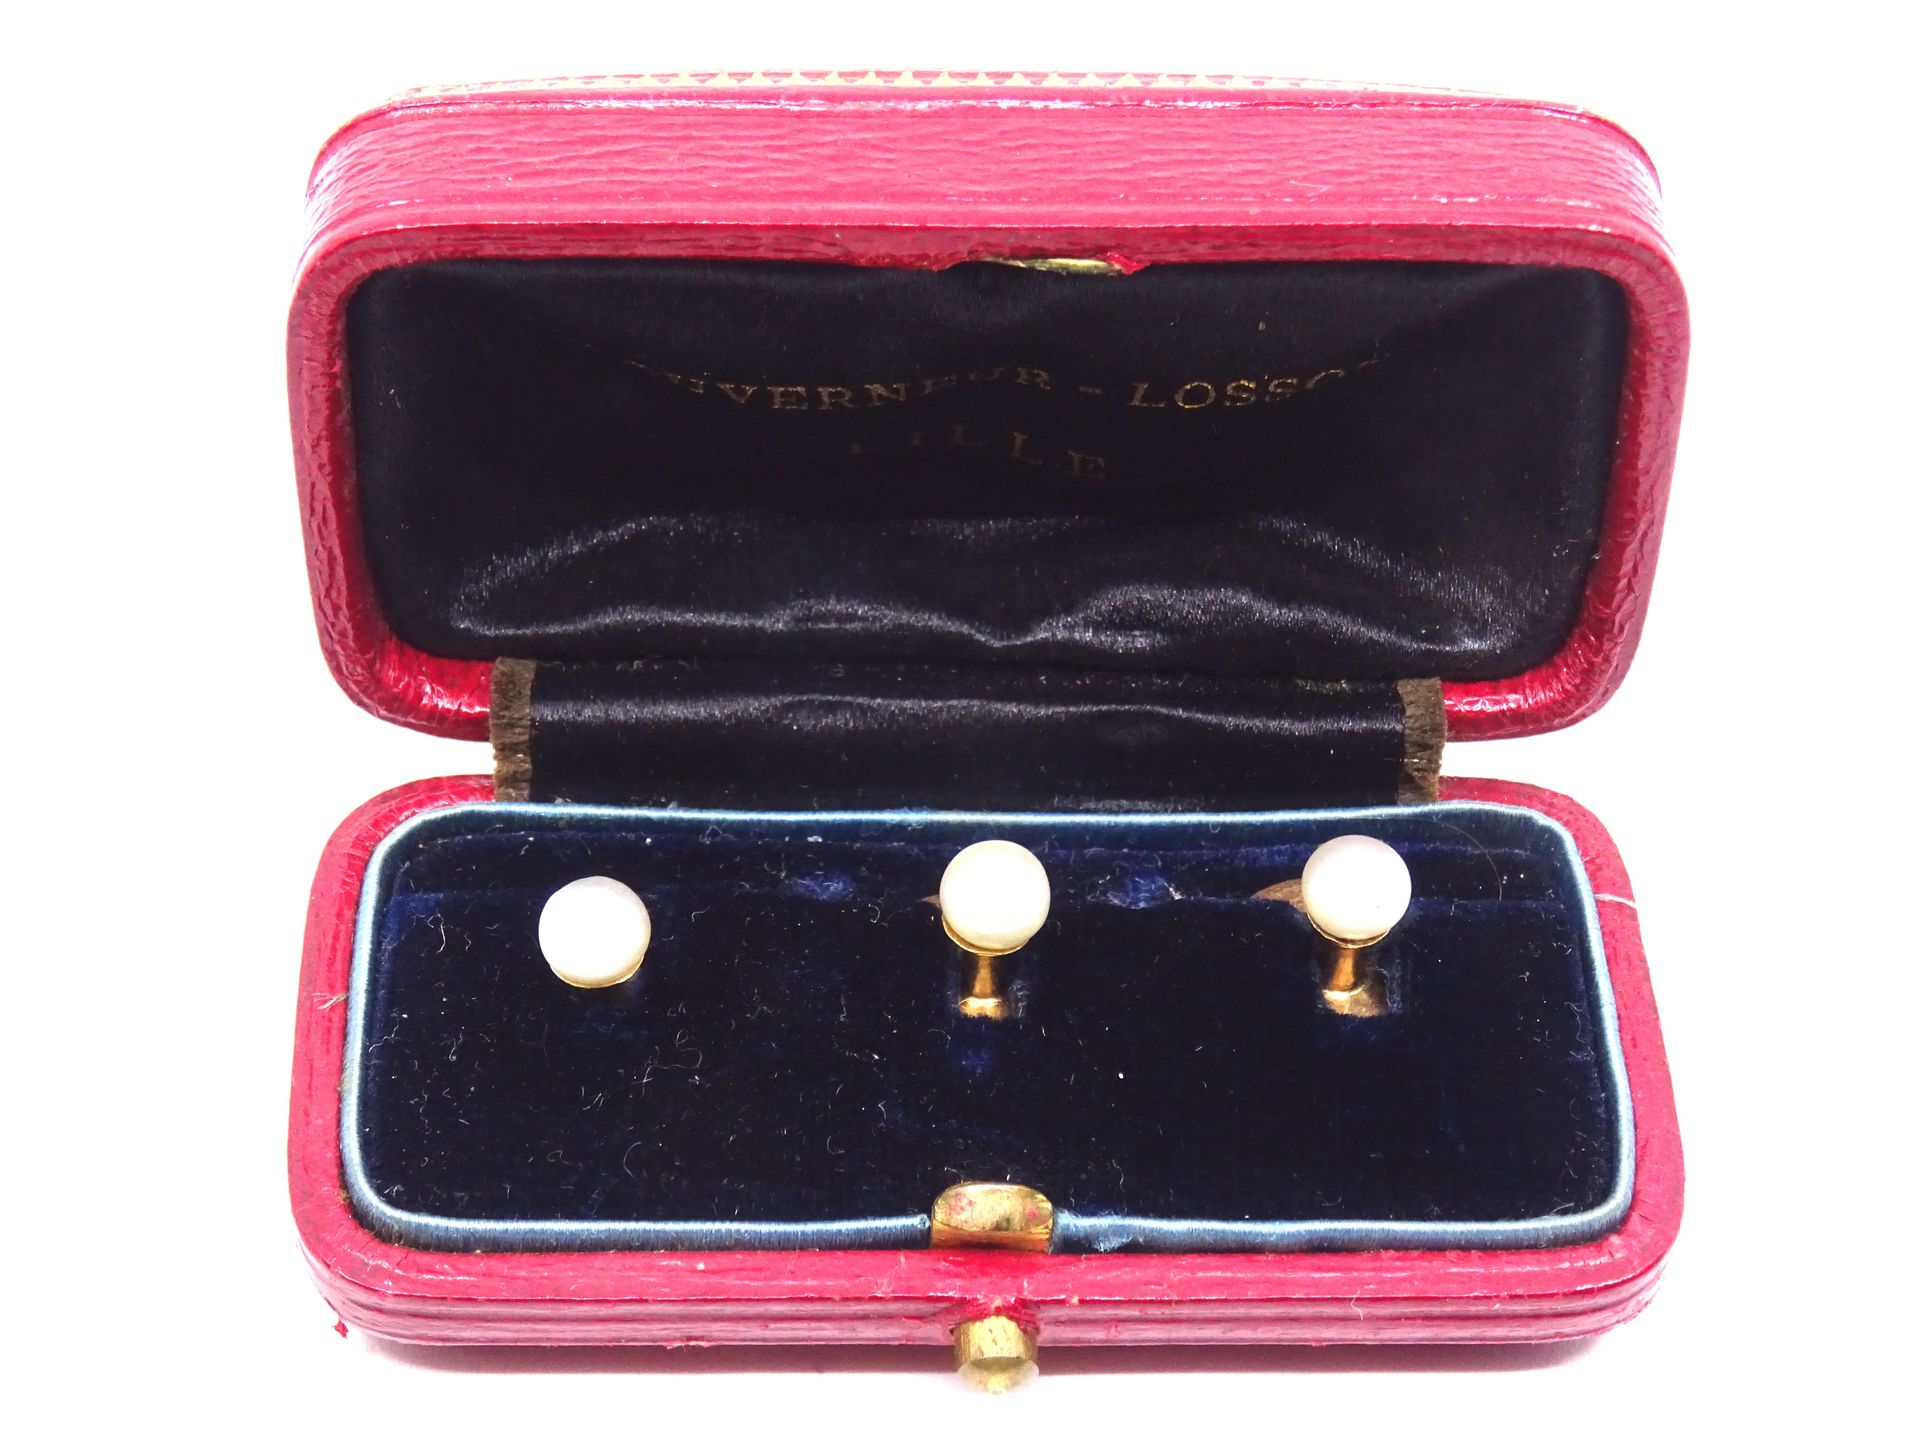 Null 3 颗领扣，每颗领扣上都有一颗镶嵌在黄金（千分之 750）上的白色珍珠纽扣。鹰头印记。重量：3.4 克。装在一个盒子里。